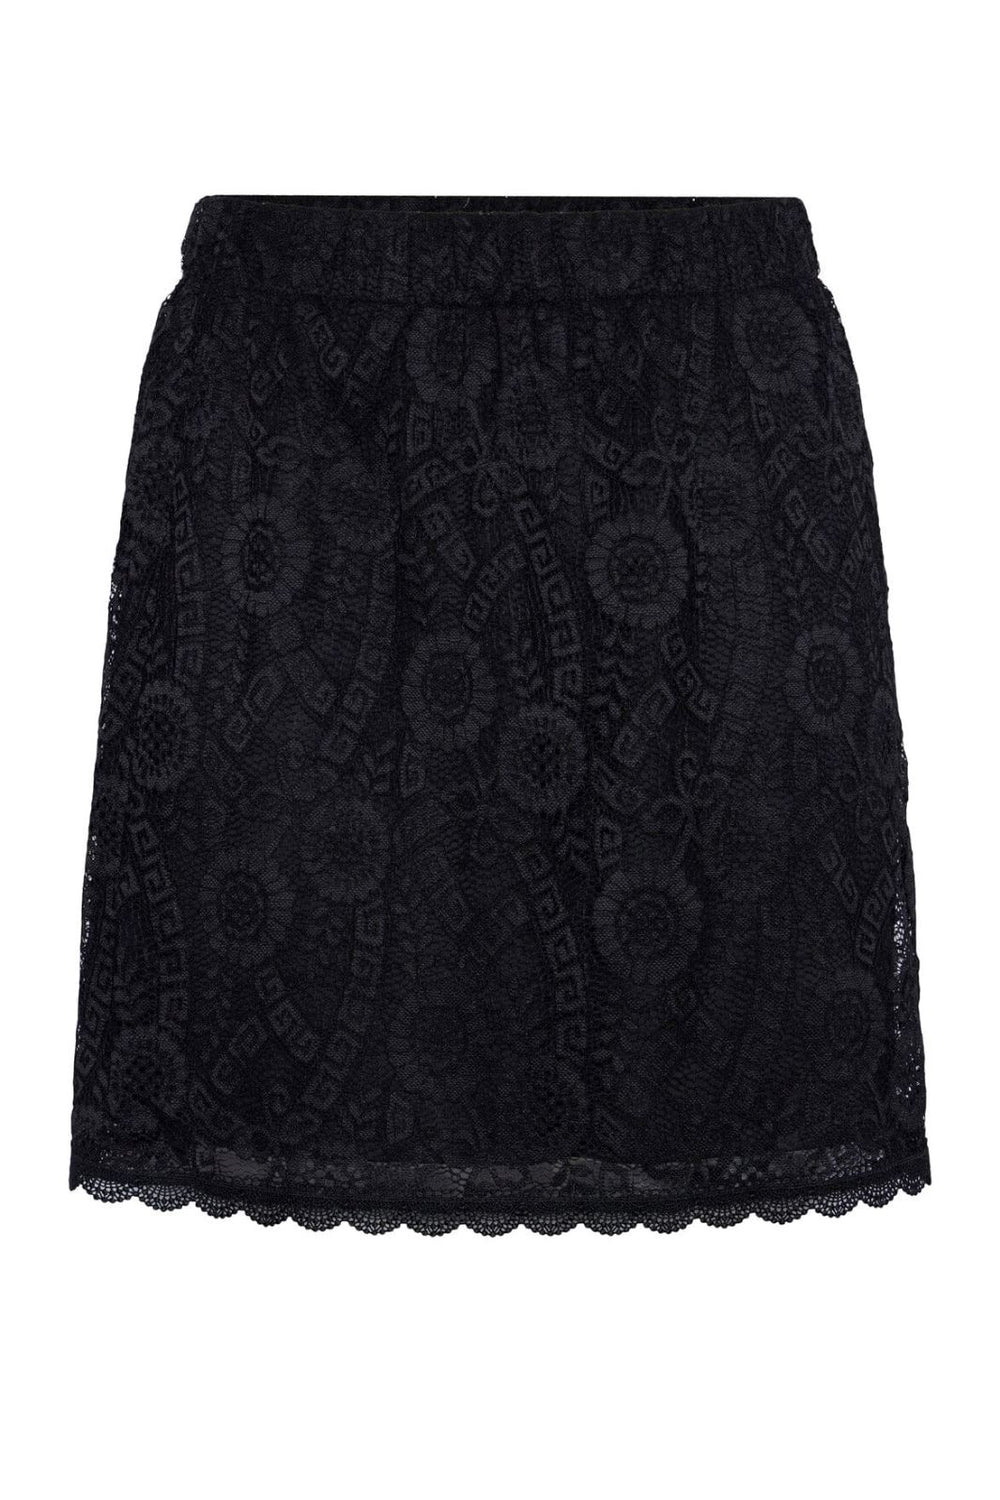 Pieces - Pcolline Skirt Cp - 4243269 Black Nederdele 